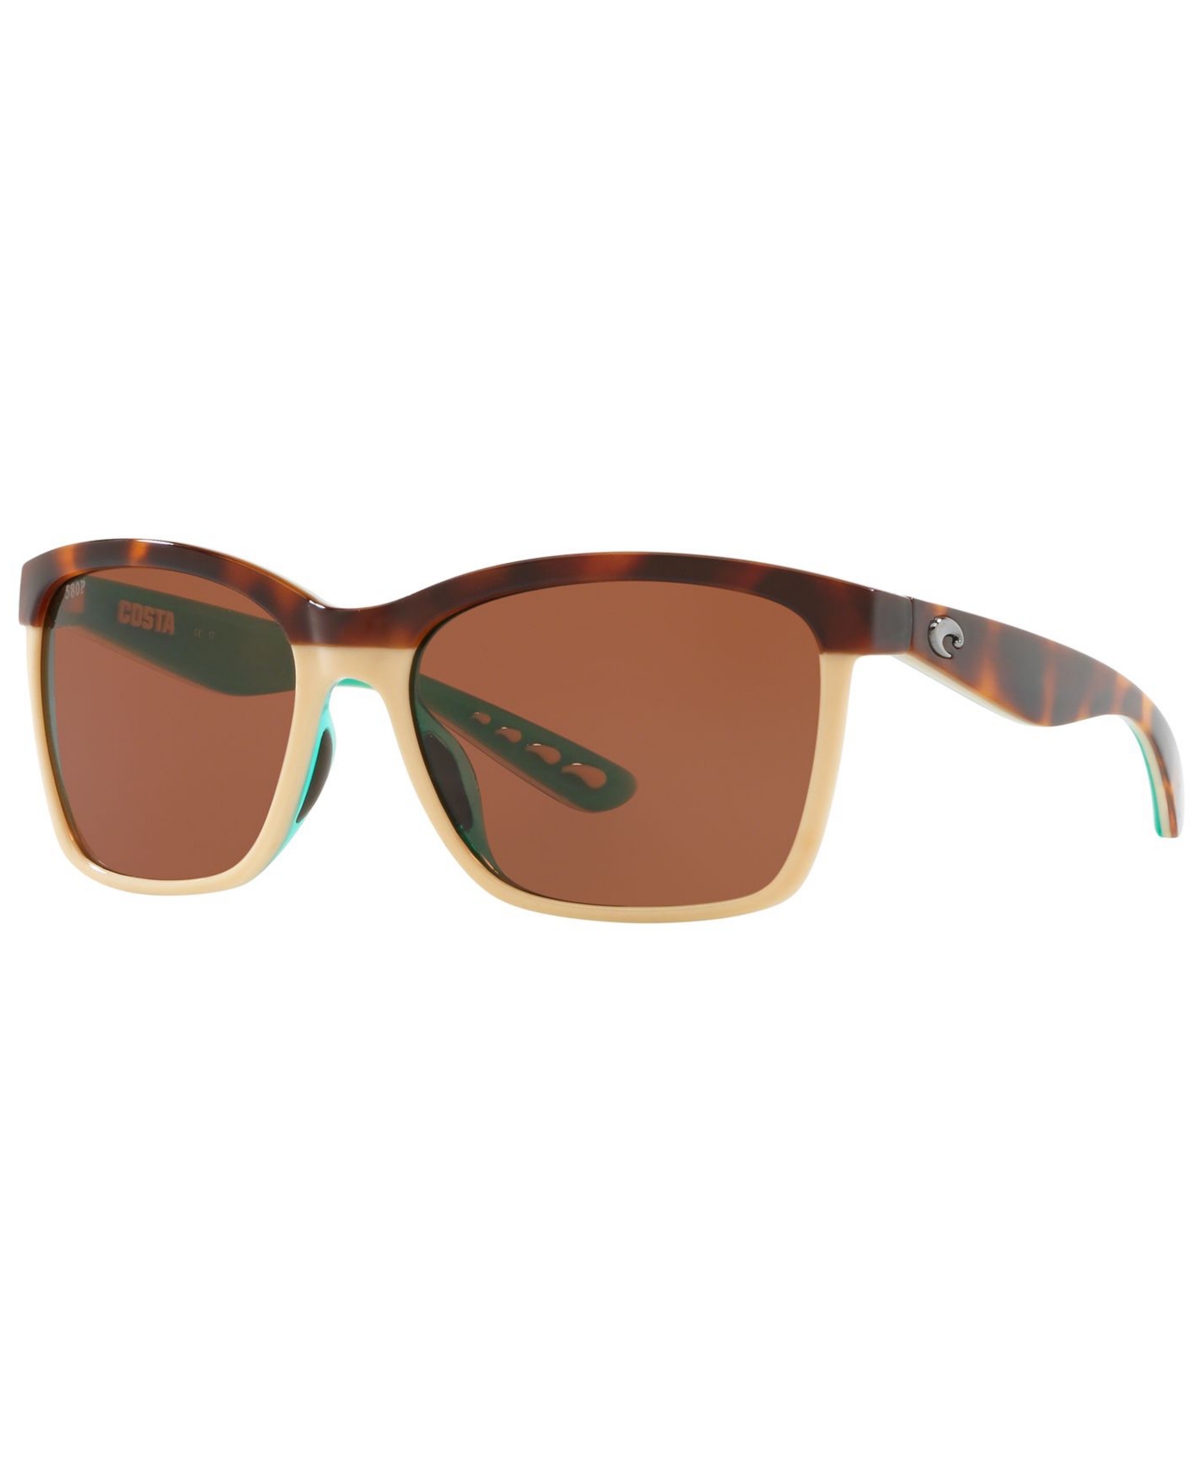 Polarized Sunglasses, Cdm Anaa 55 - TORTOISE/COPPER